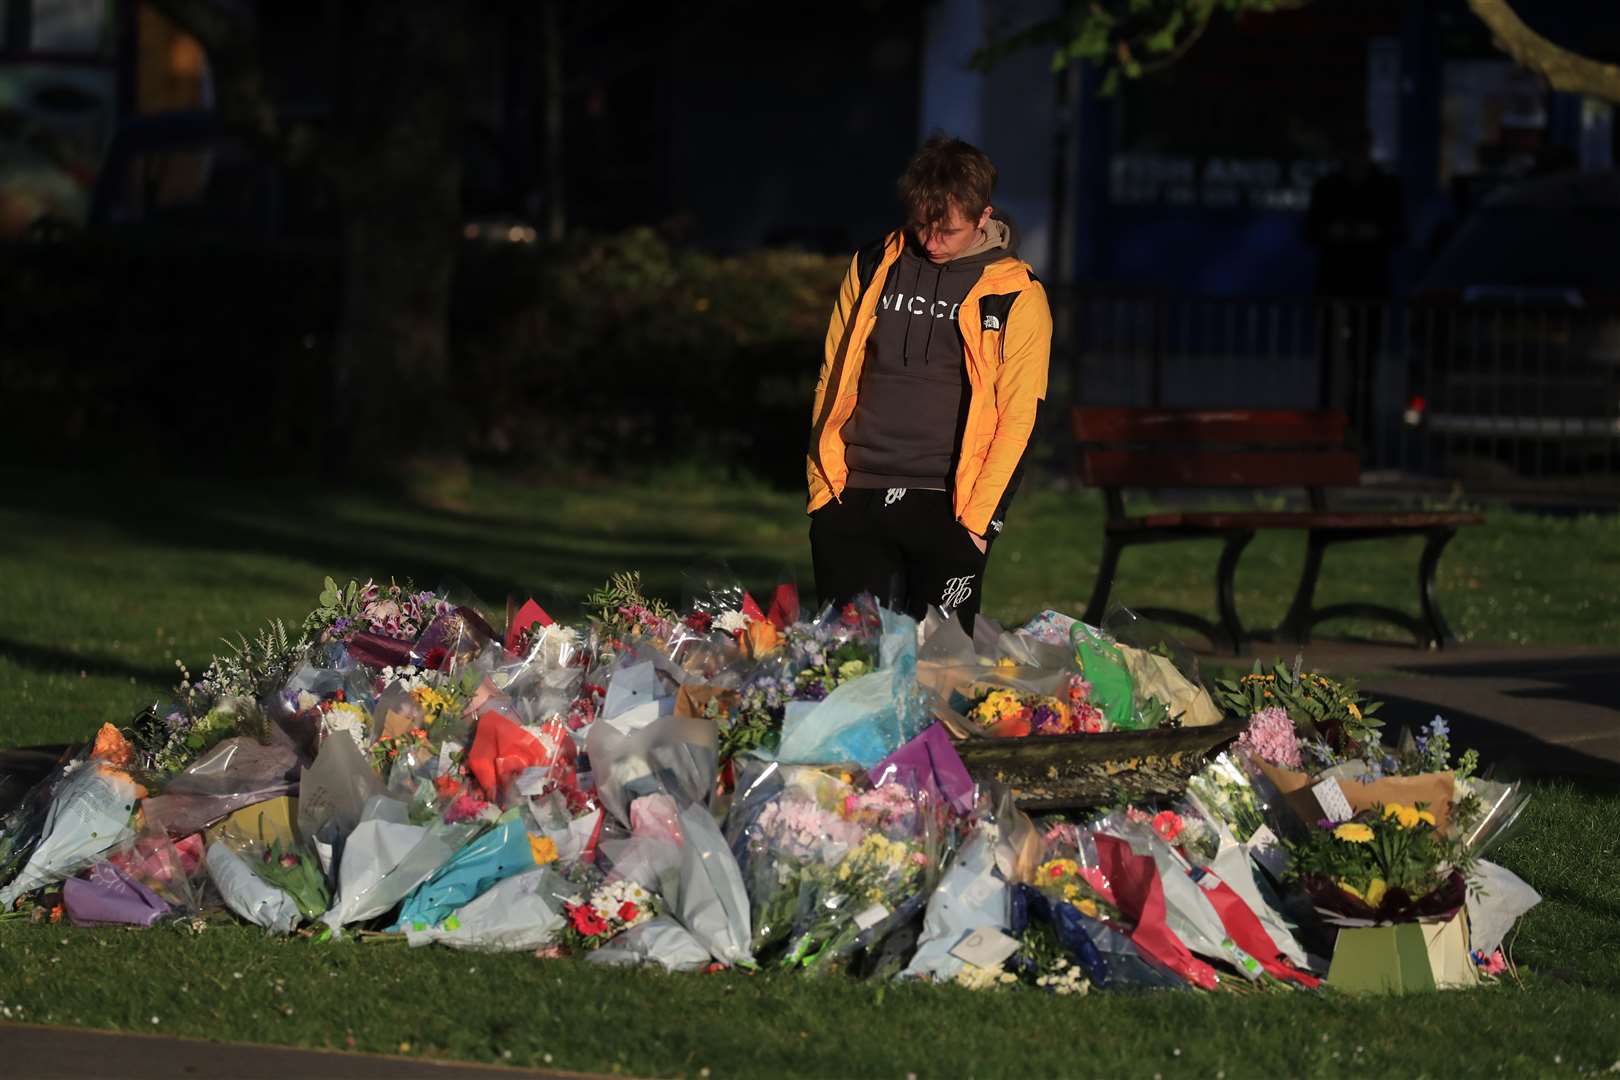 Patrick James, the son of PCSO Julia James, looks at floral tributes left near her family home in Snowdown, near Aylesham, Kent (Gareth Fuller/PA)